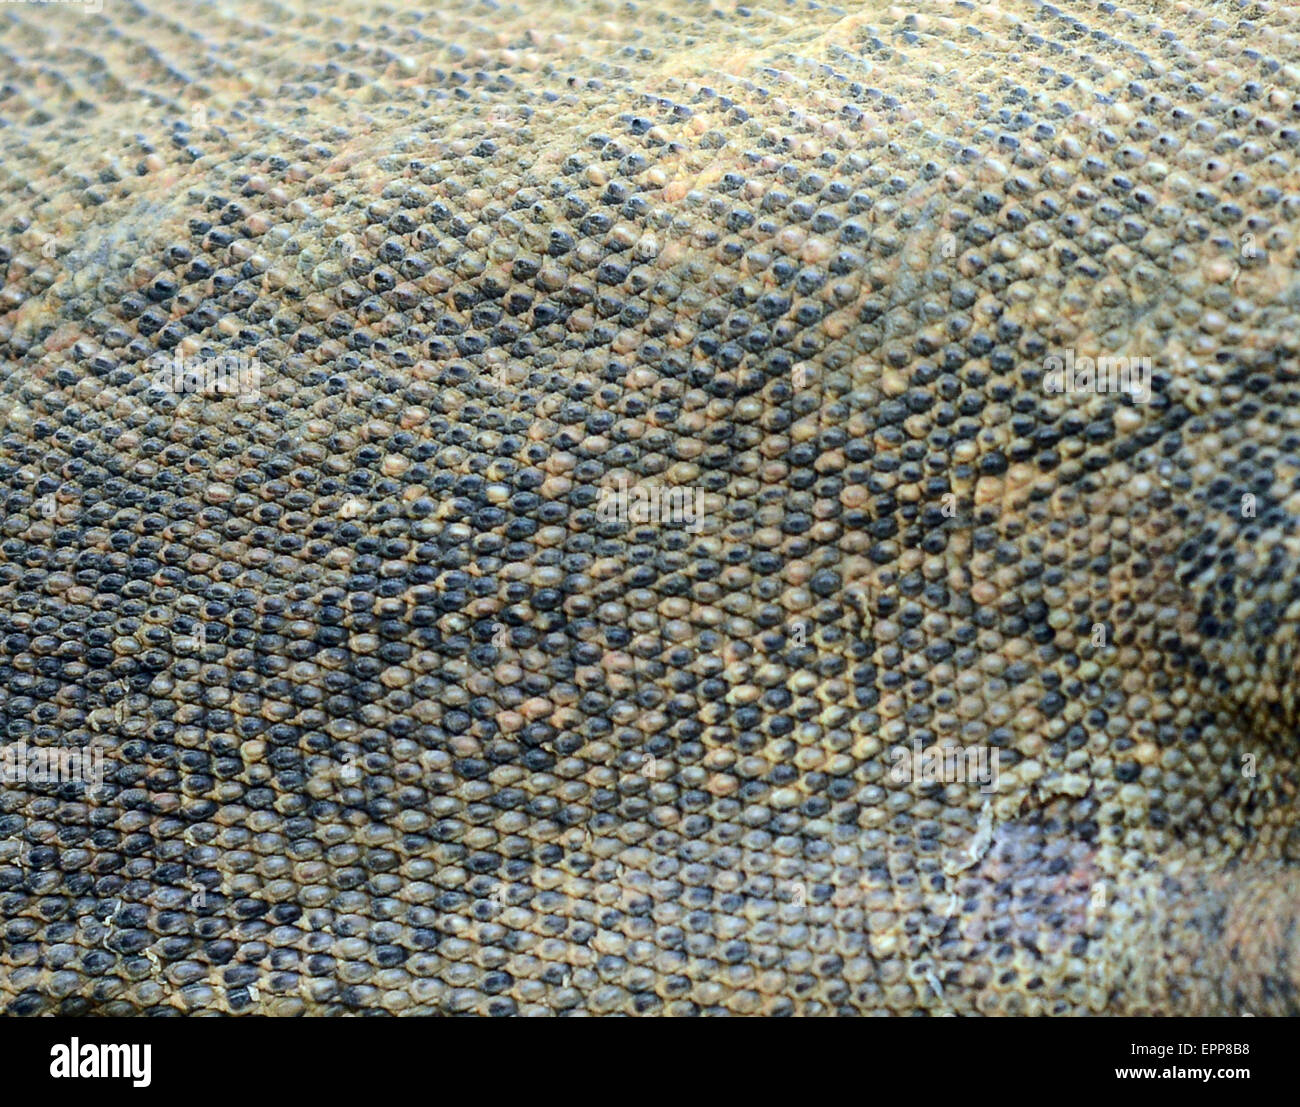 Komodo dragon skin close up Stock Photo